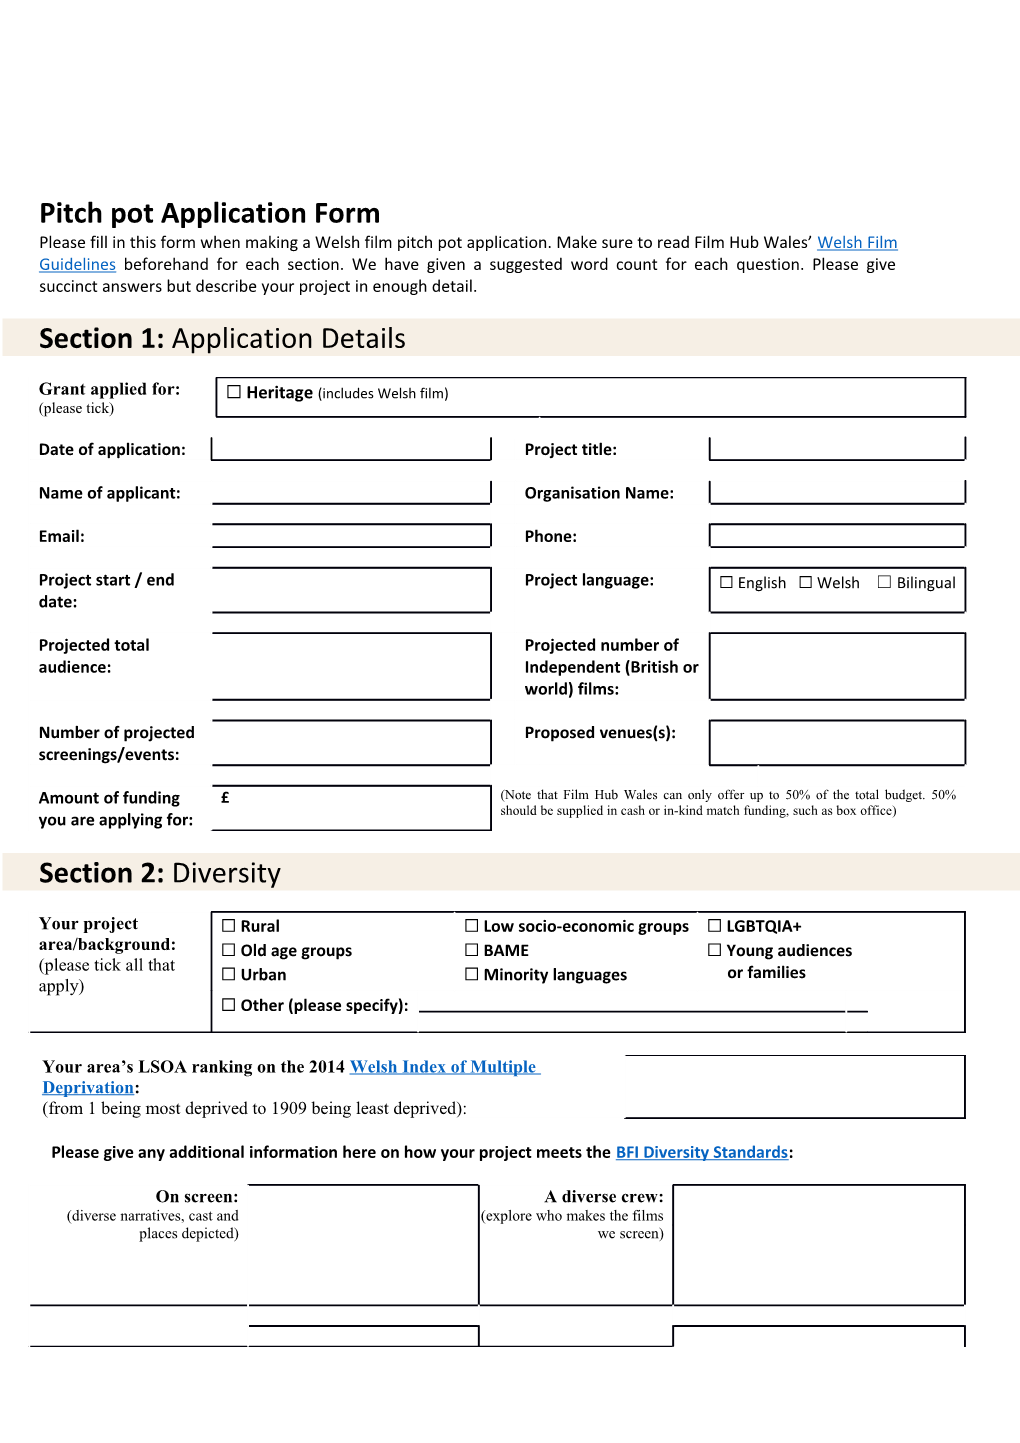 Pitch Pot Application Form